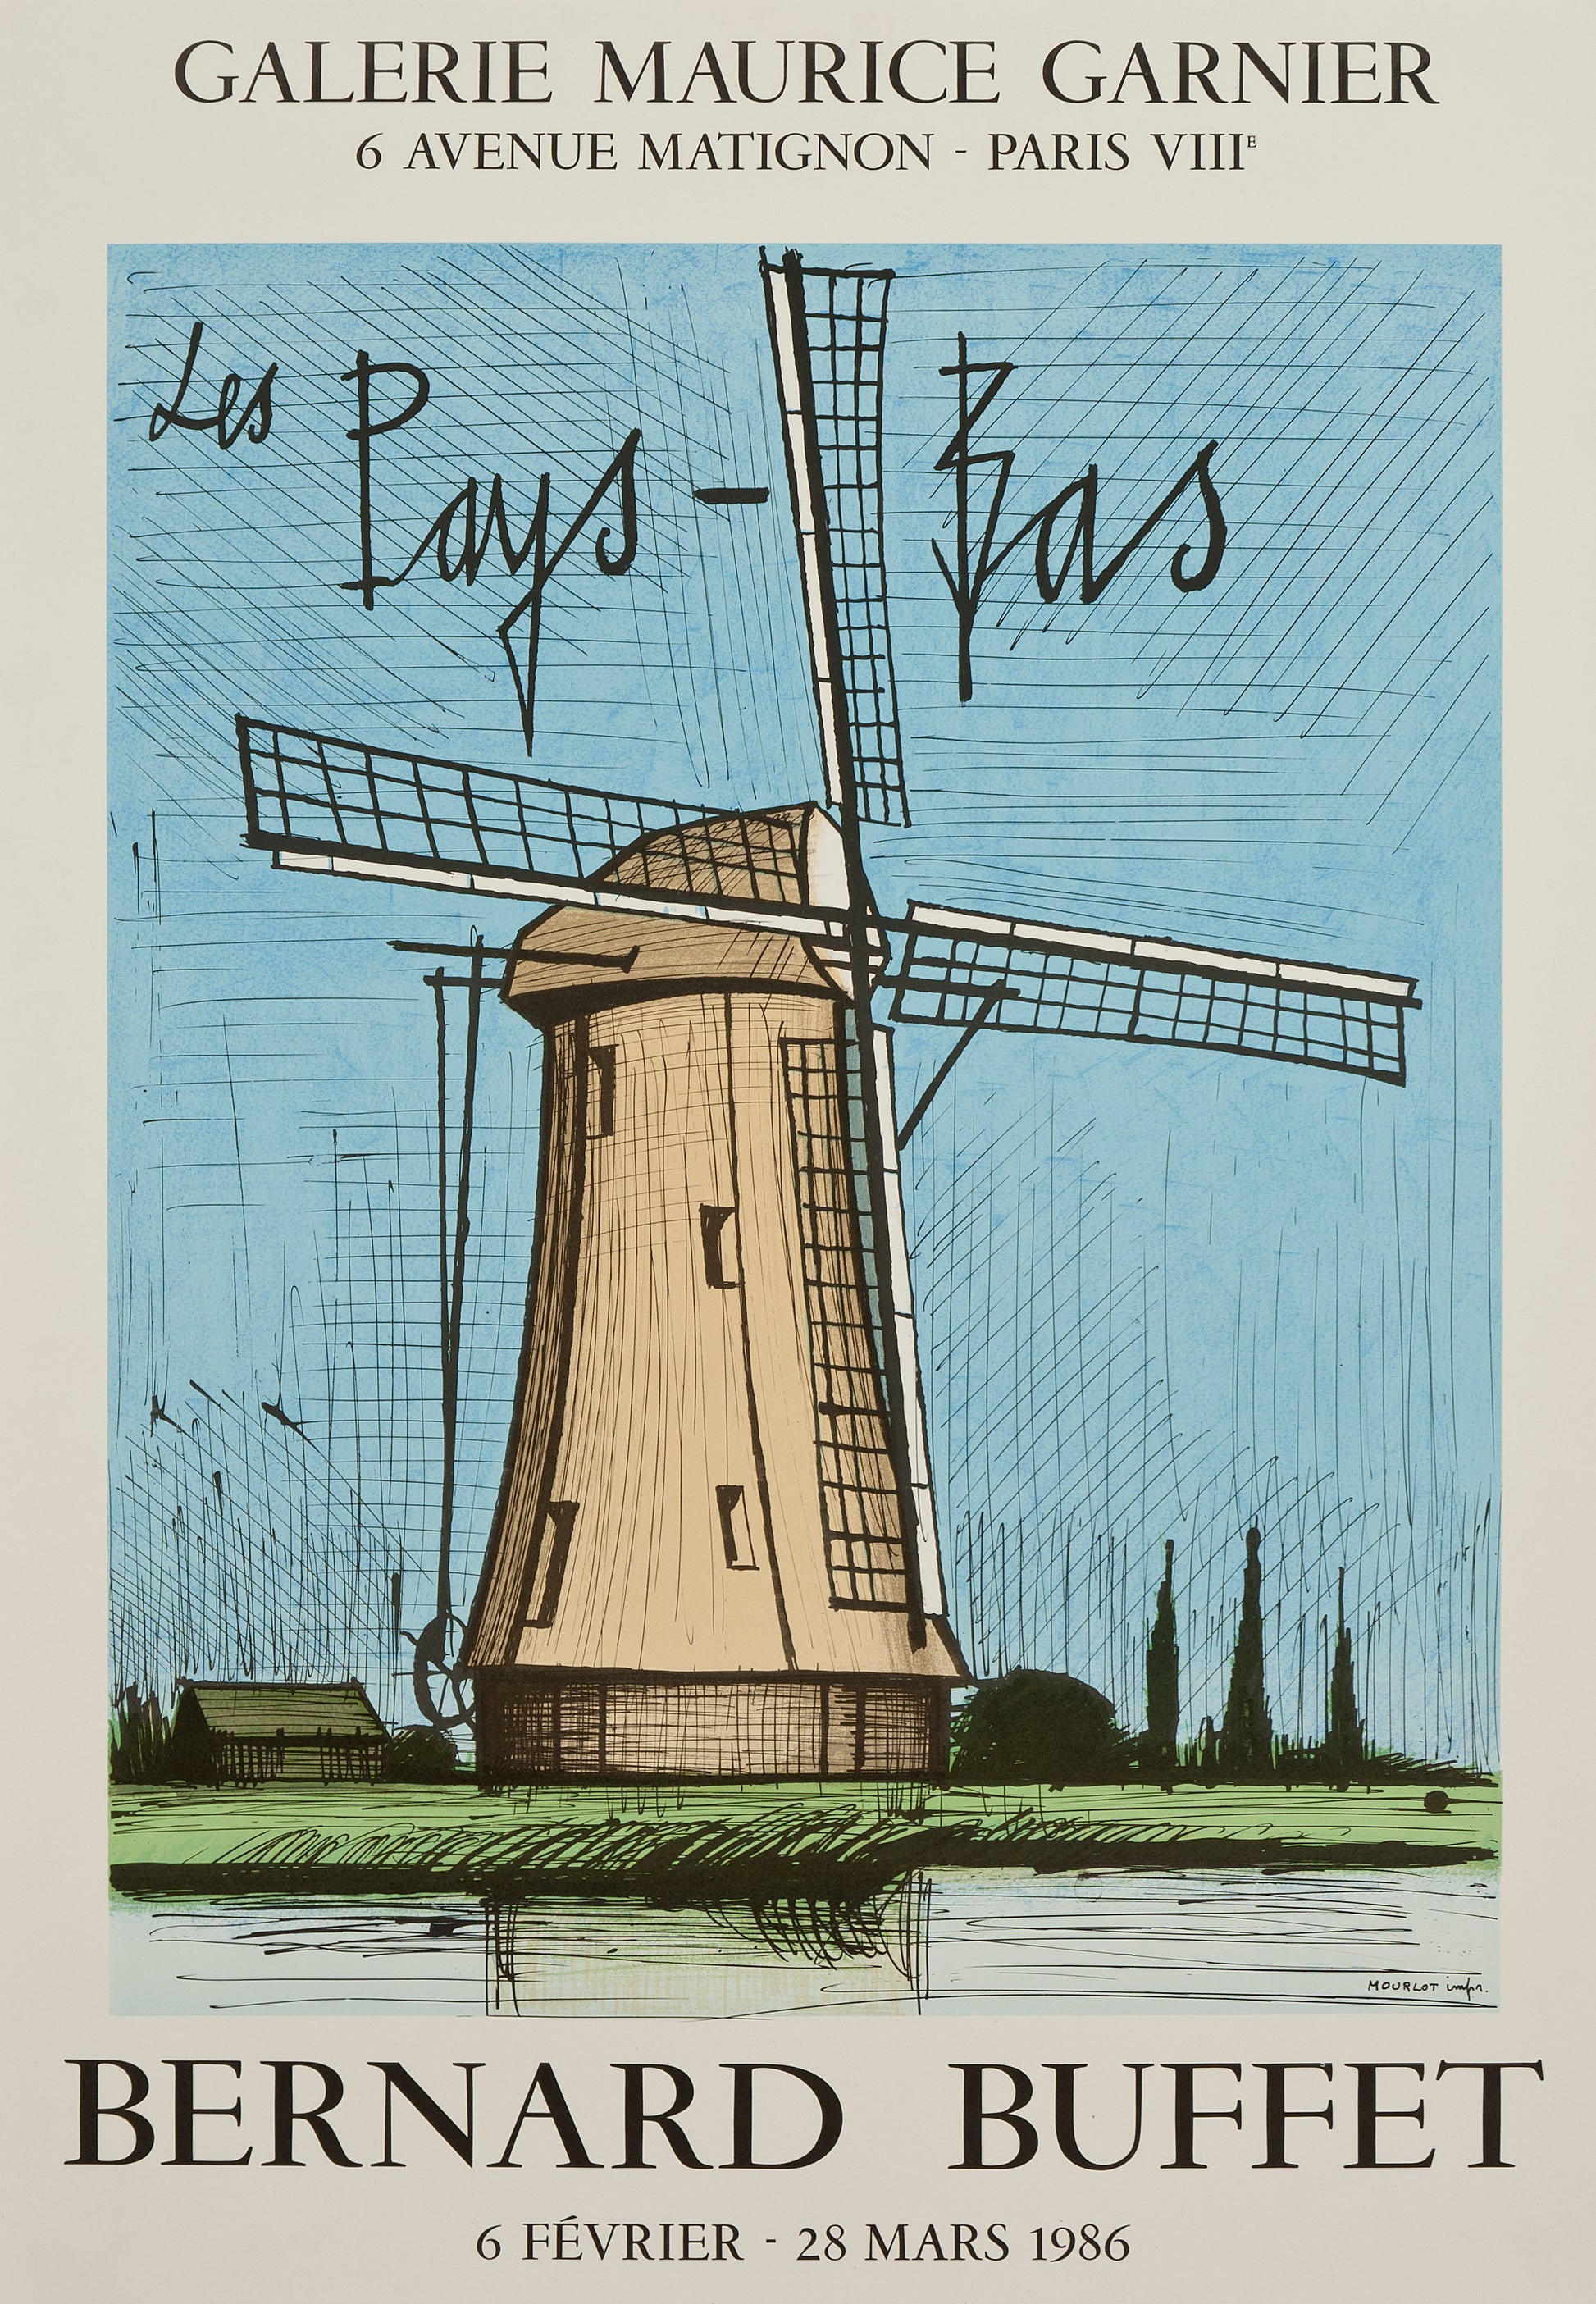 Moulin Hollandais - Les Pays-Bas by Bernard Buffet, 1986 - Mourlot Editions - Fine_Art - Poster - Lithograph - Wall Art - Vintage - Prints - Original